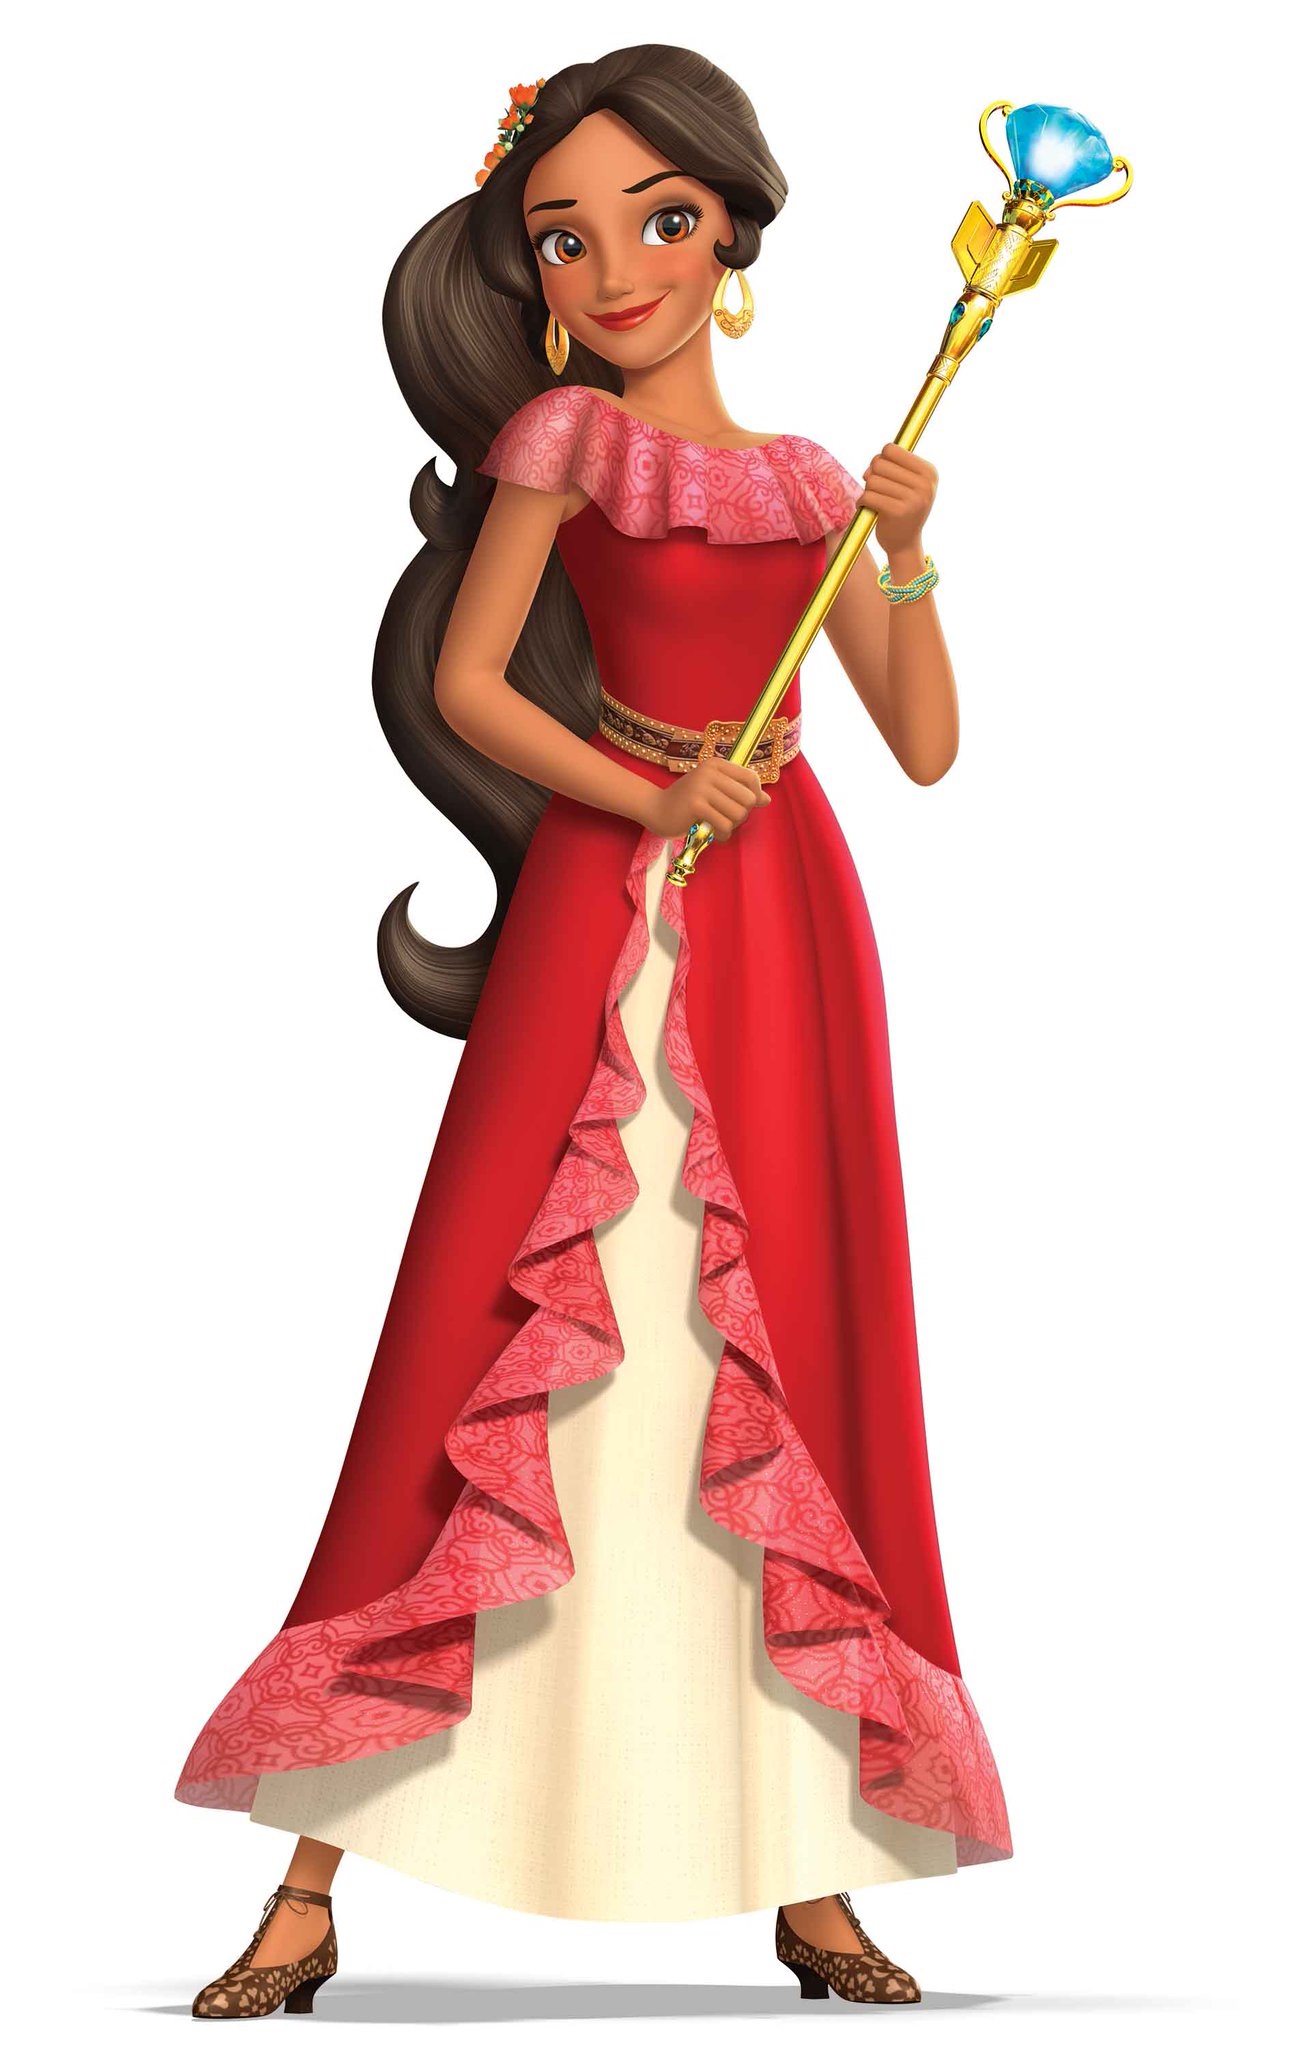 List of Disney Princesses | Disney Princess Wiki | FANDOM powered by ...